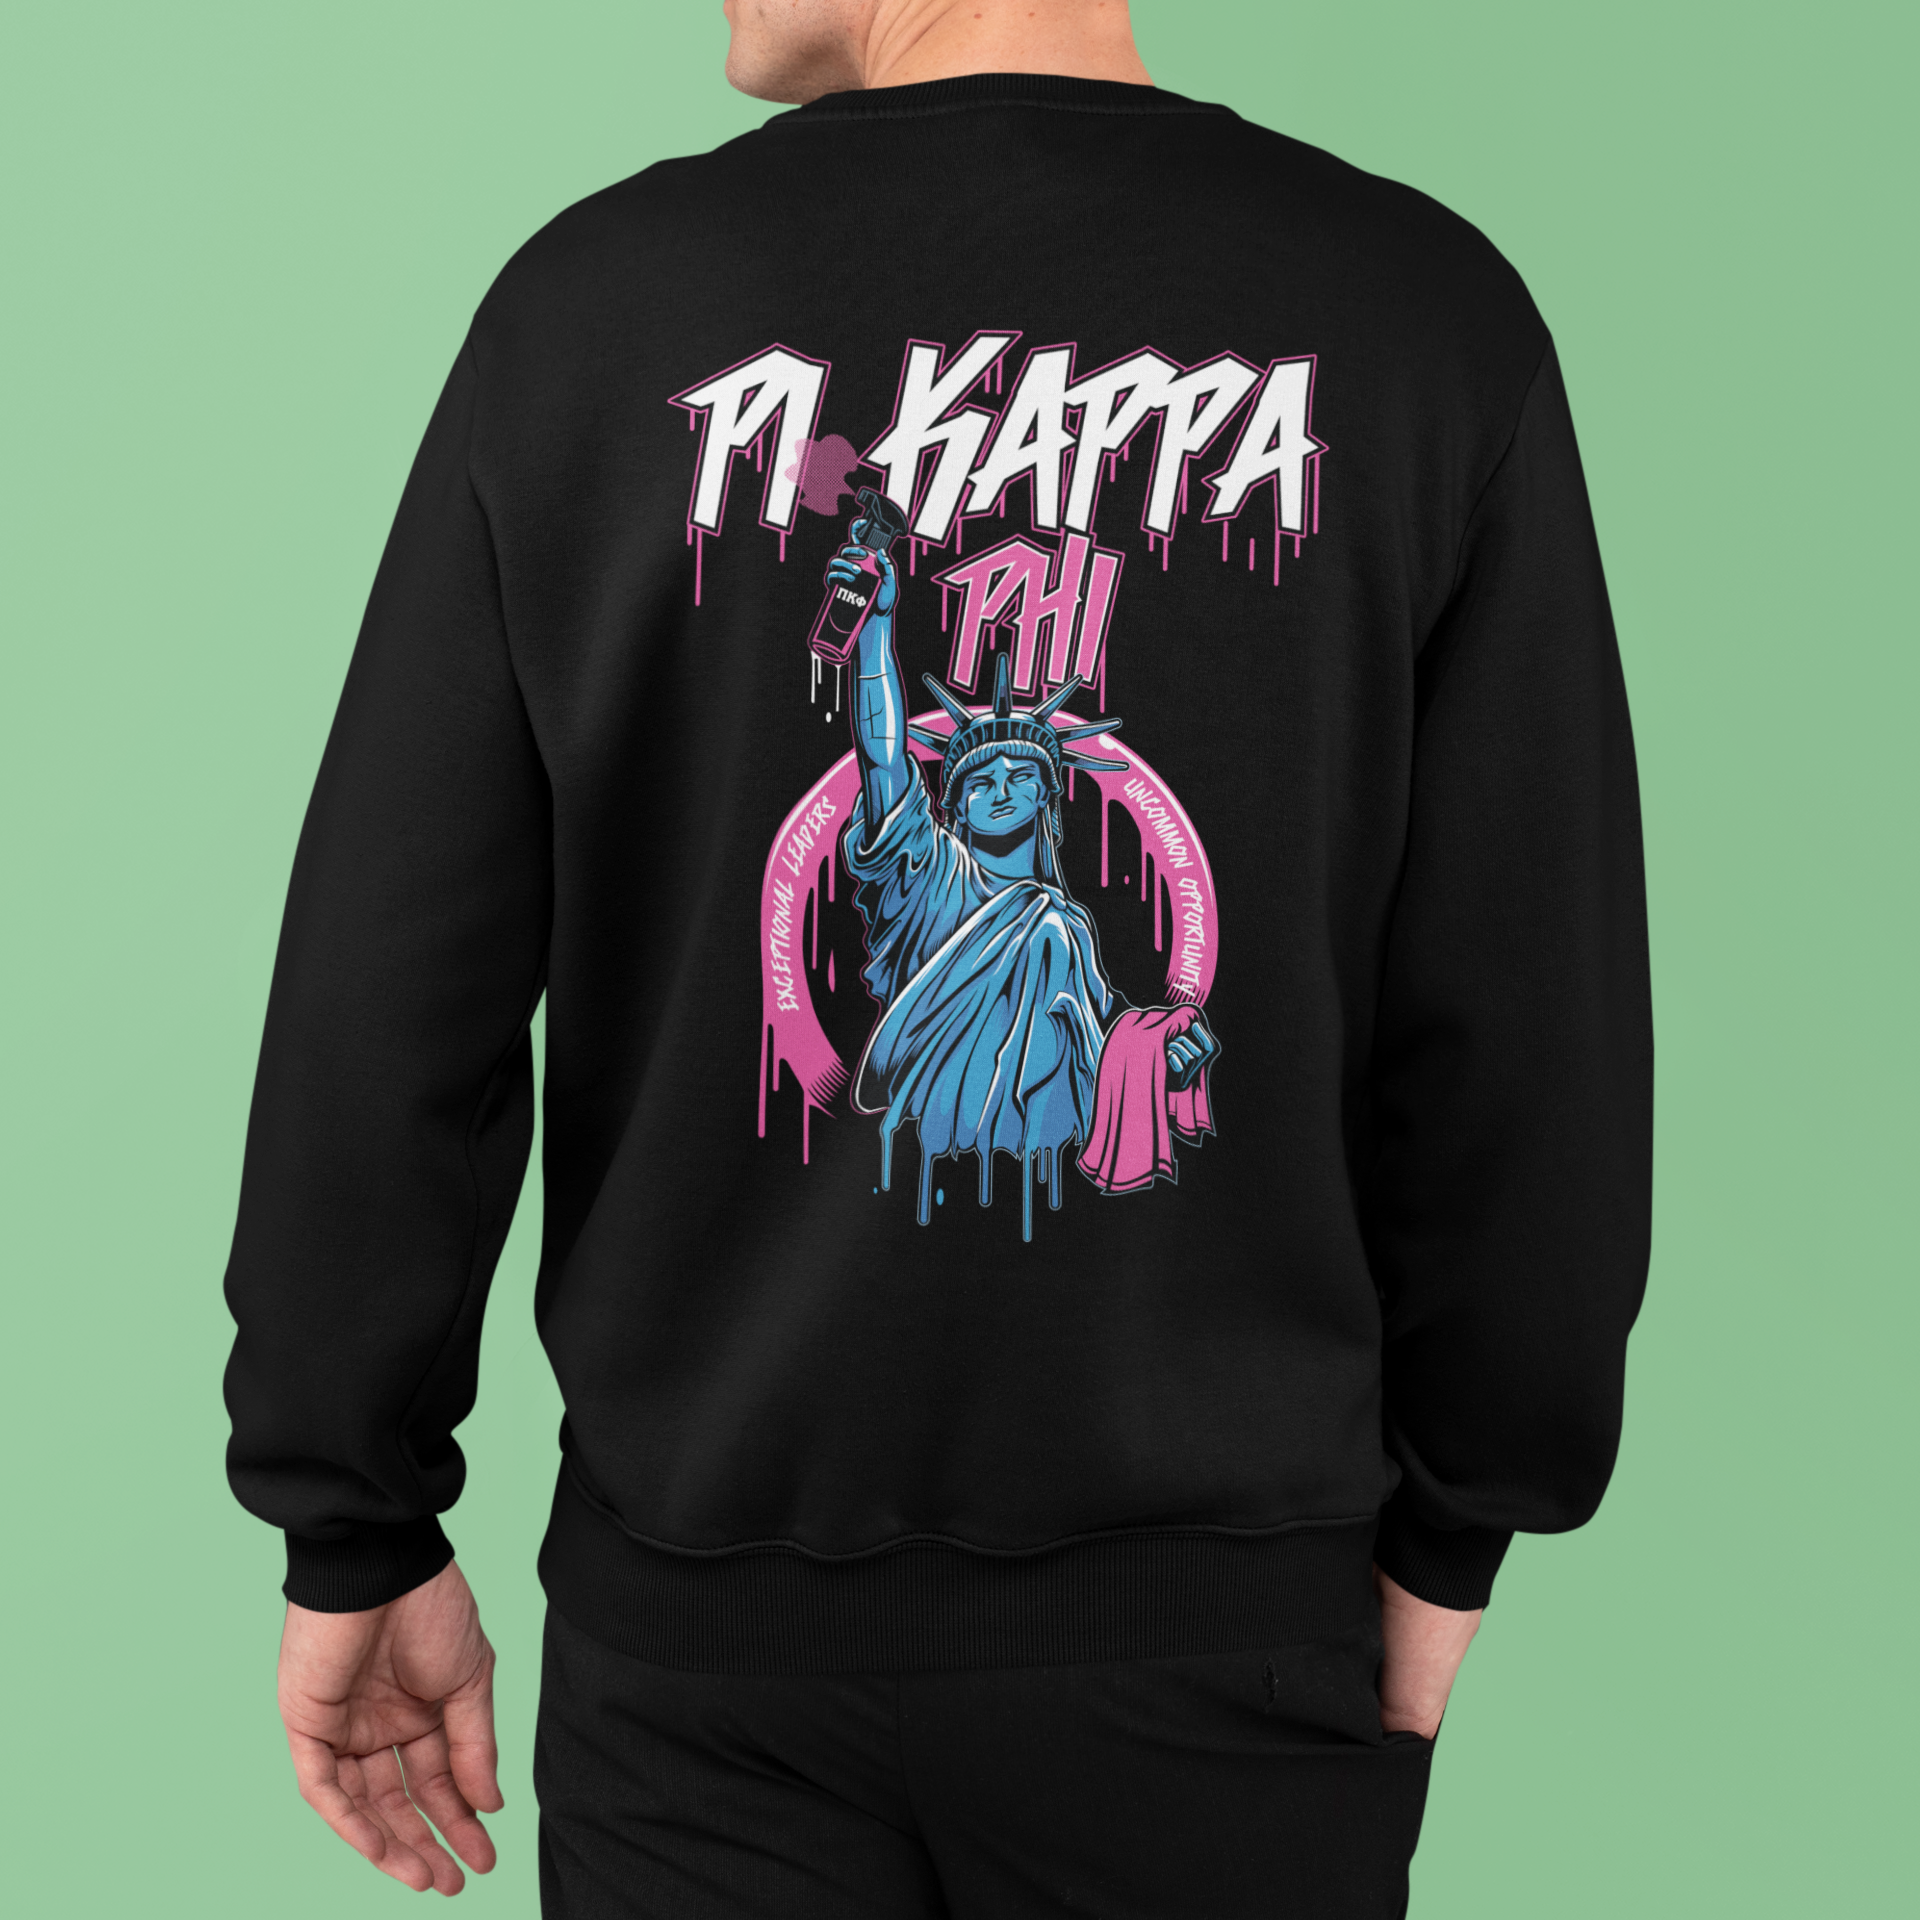 Pi Kappa Phi Graphic Crewneck Sweatshirt | Liberty Rebel | Pi Kappa Phi Apparel and Merchandise model 